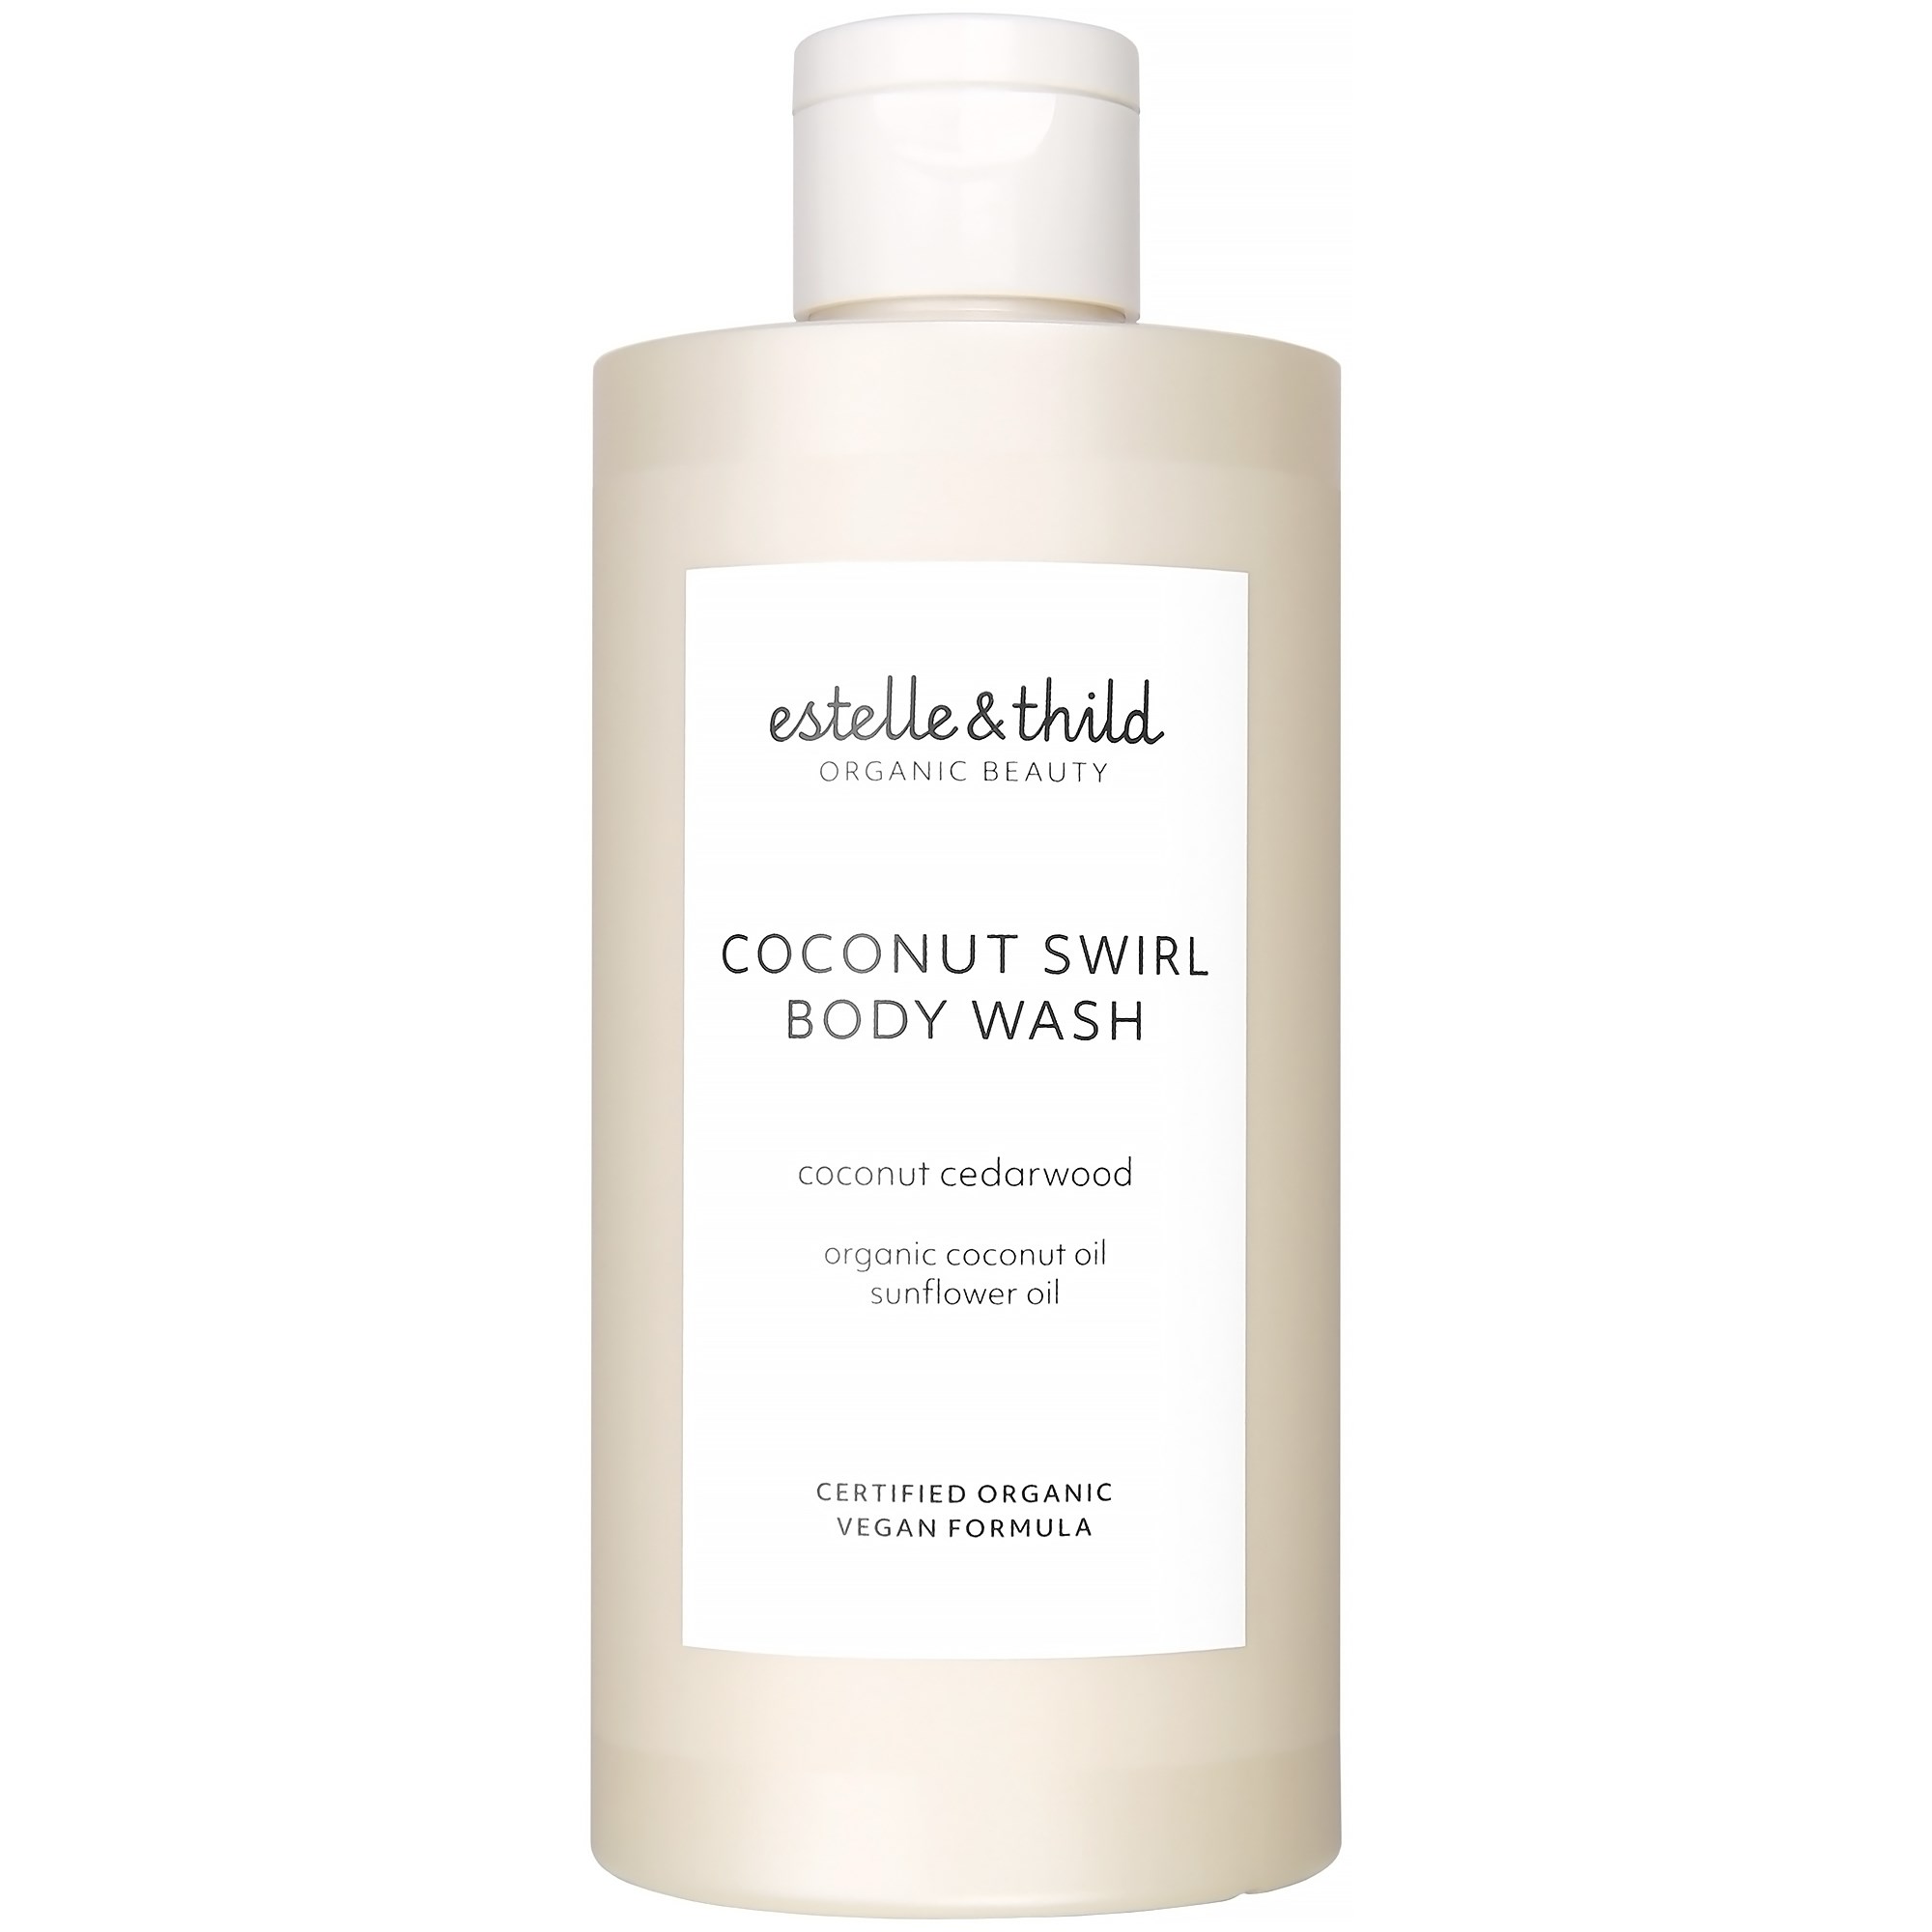 Bilde av Estelle&thild Organic Beauty Coconut Cedarwood Coconut Swirl Body Wash